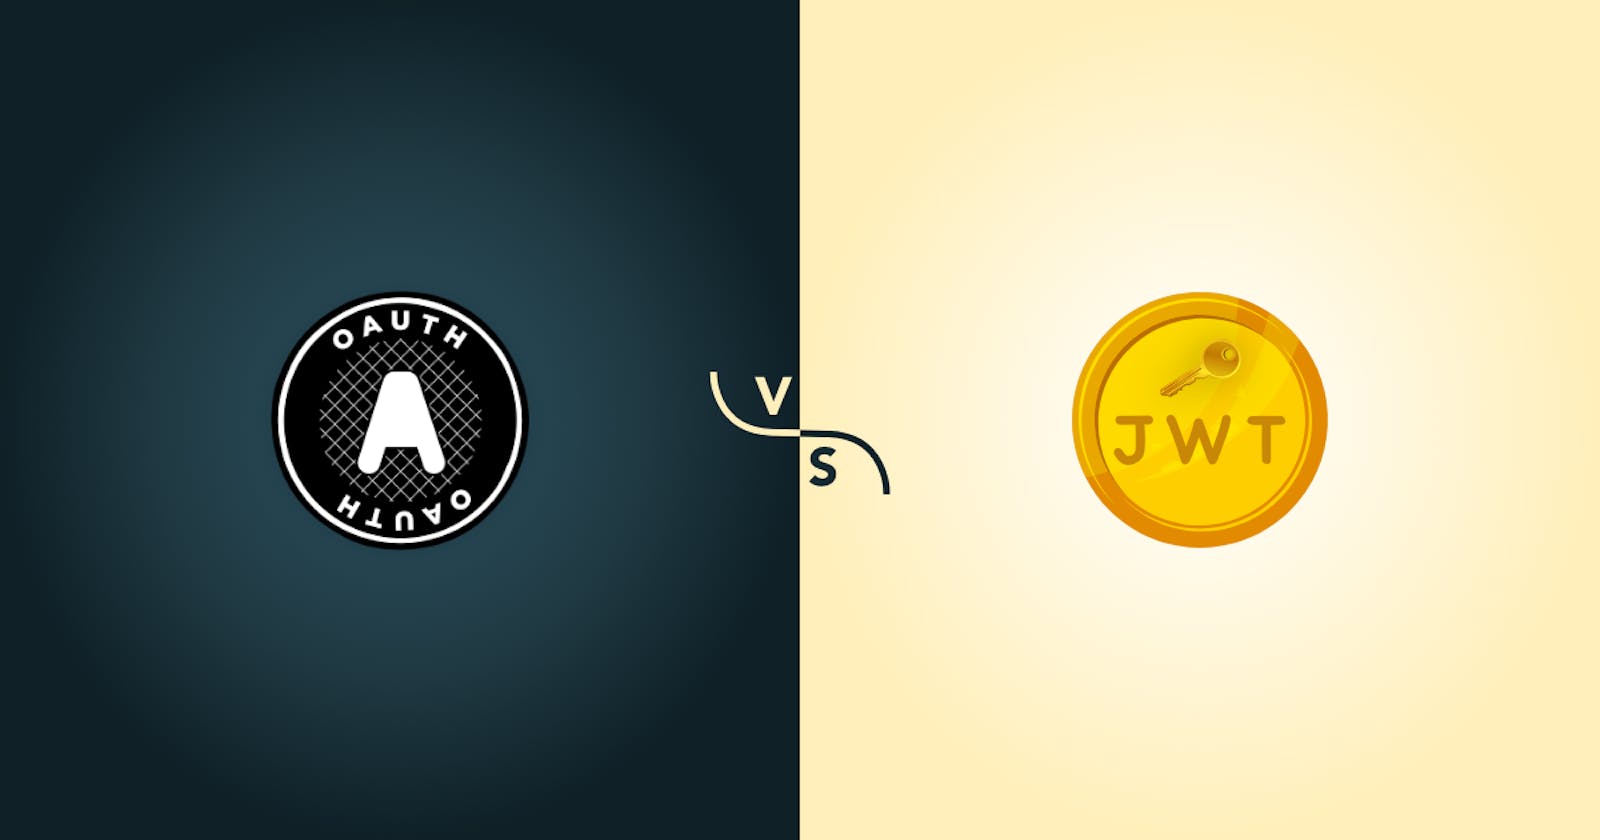 OAuth vs JWT (JSON Web Tokens): An In-Depth Comparison